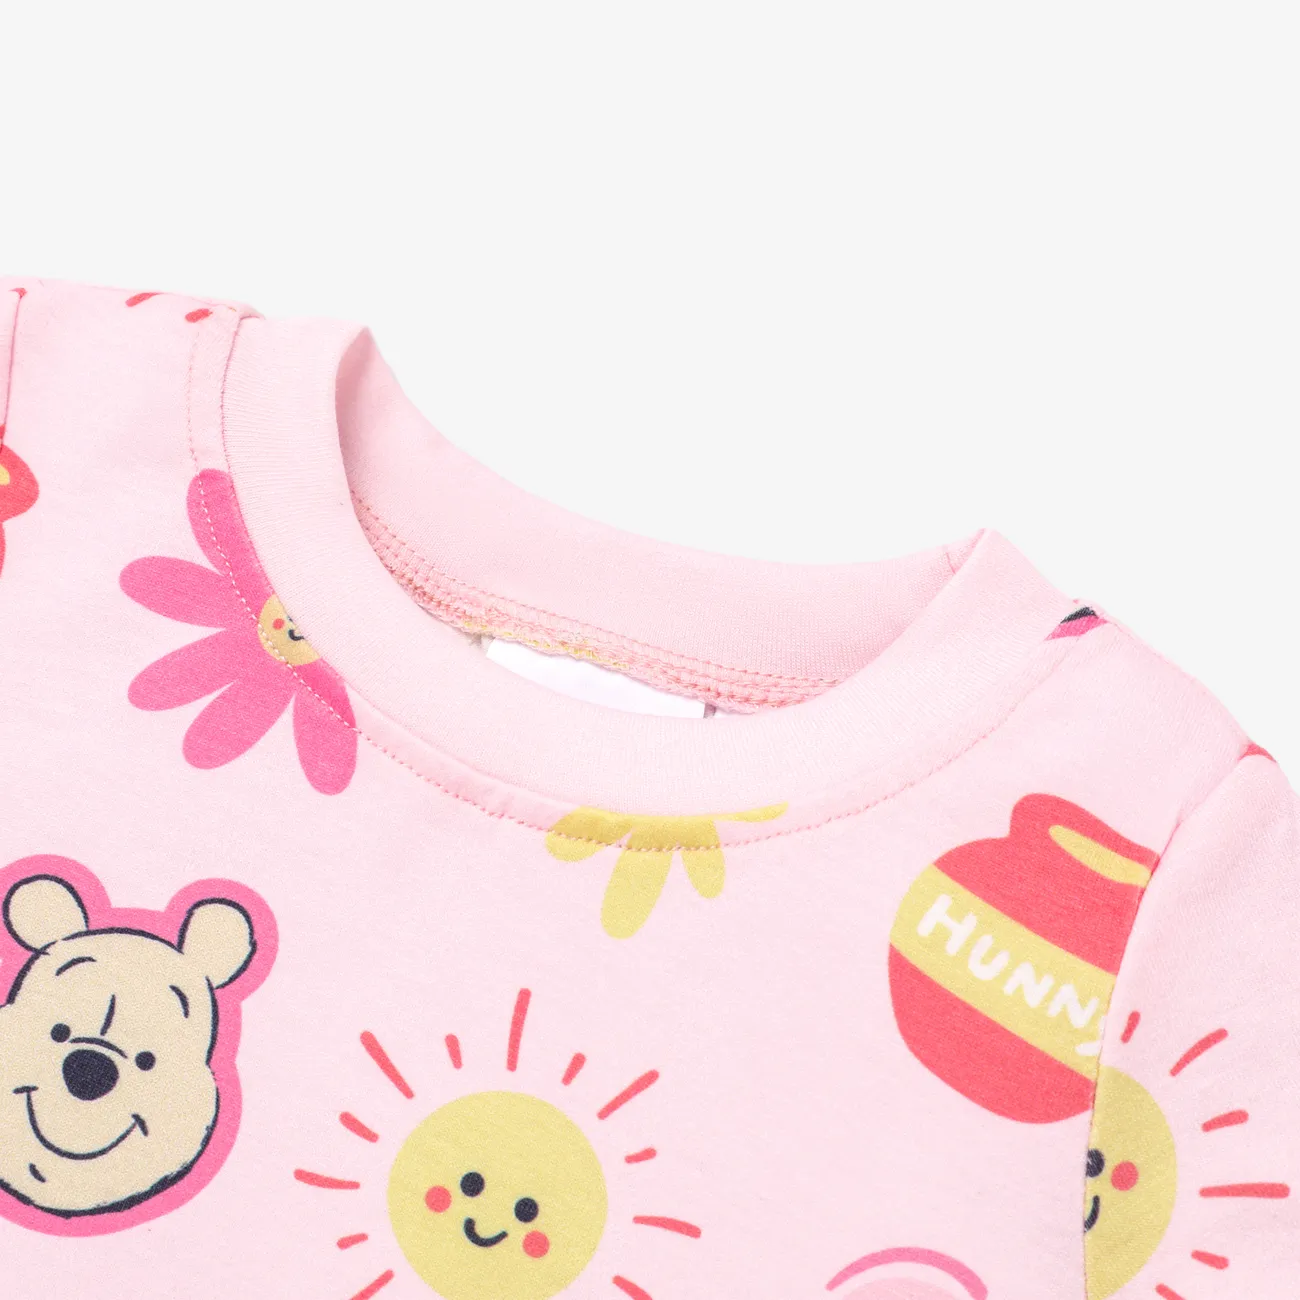 Disney Winnie the Pooh Unisex Kindlich T-Shirts rosa big image 1